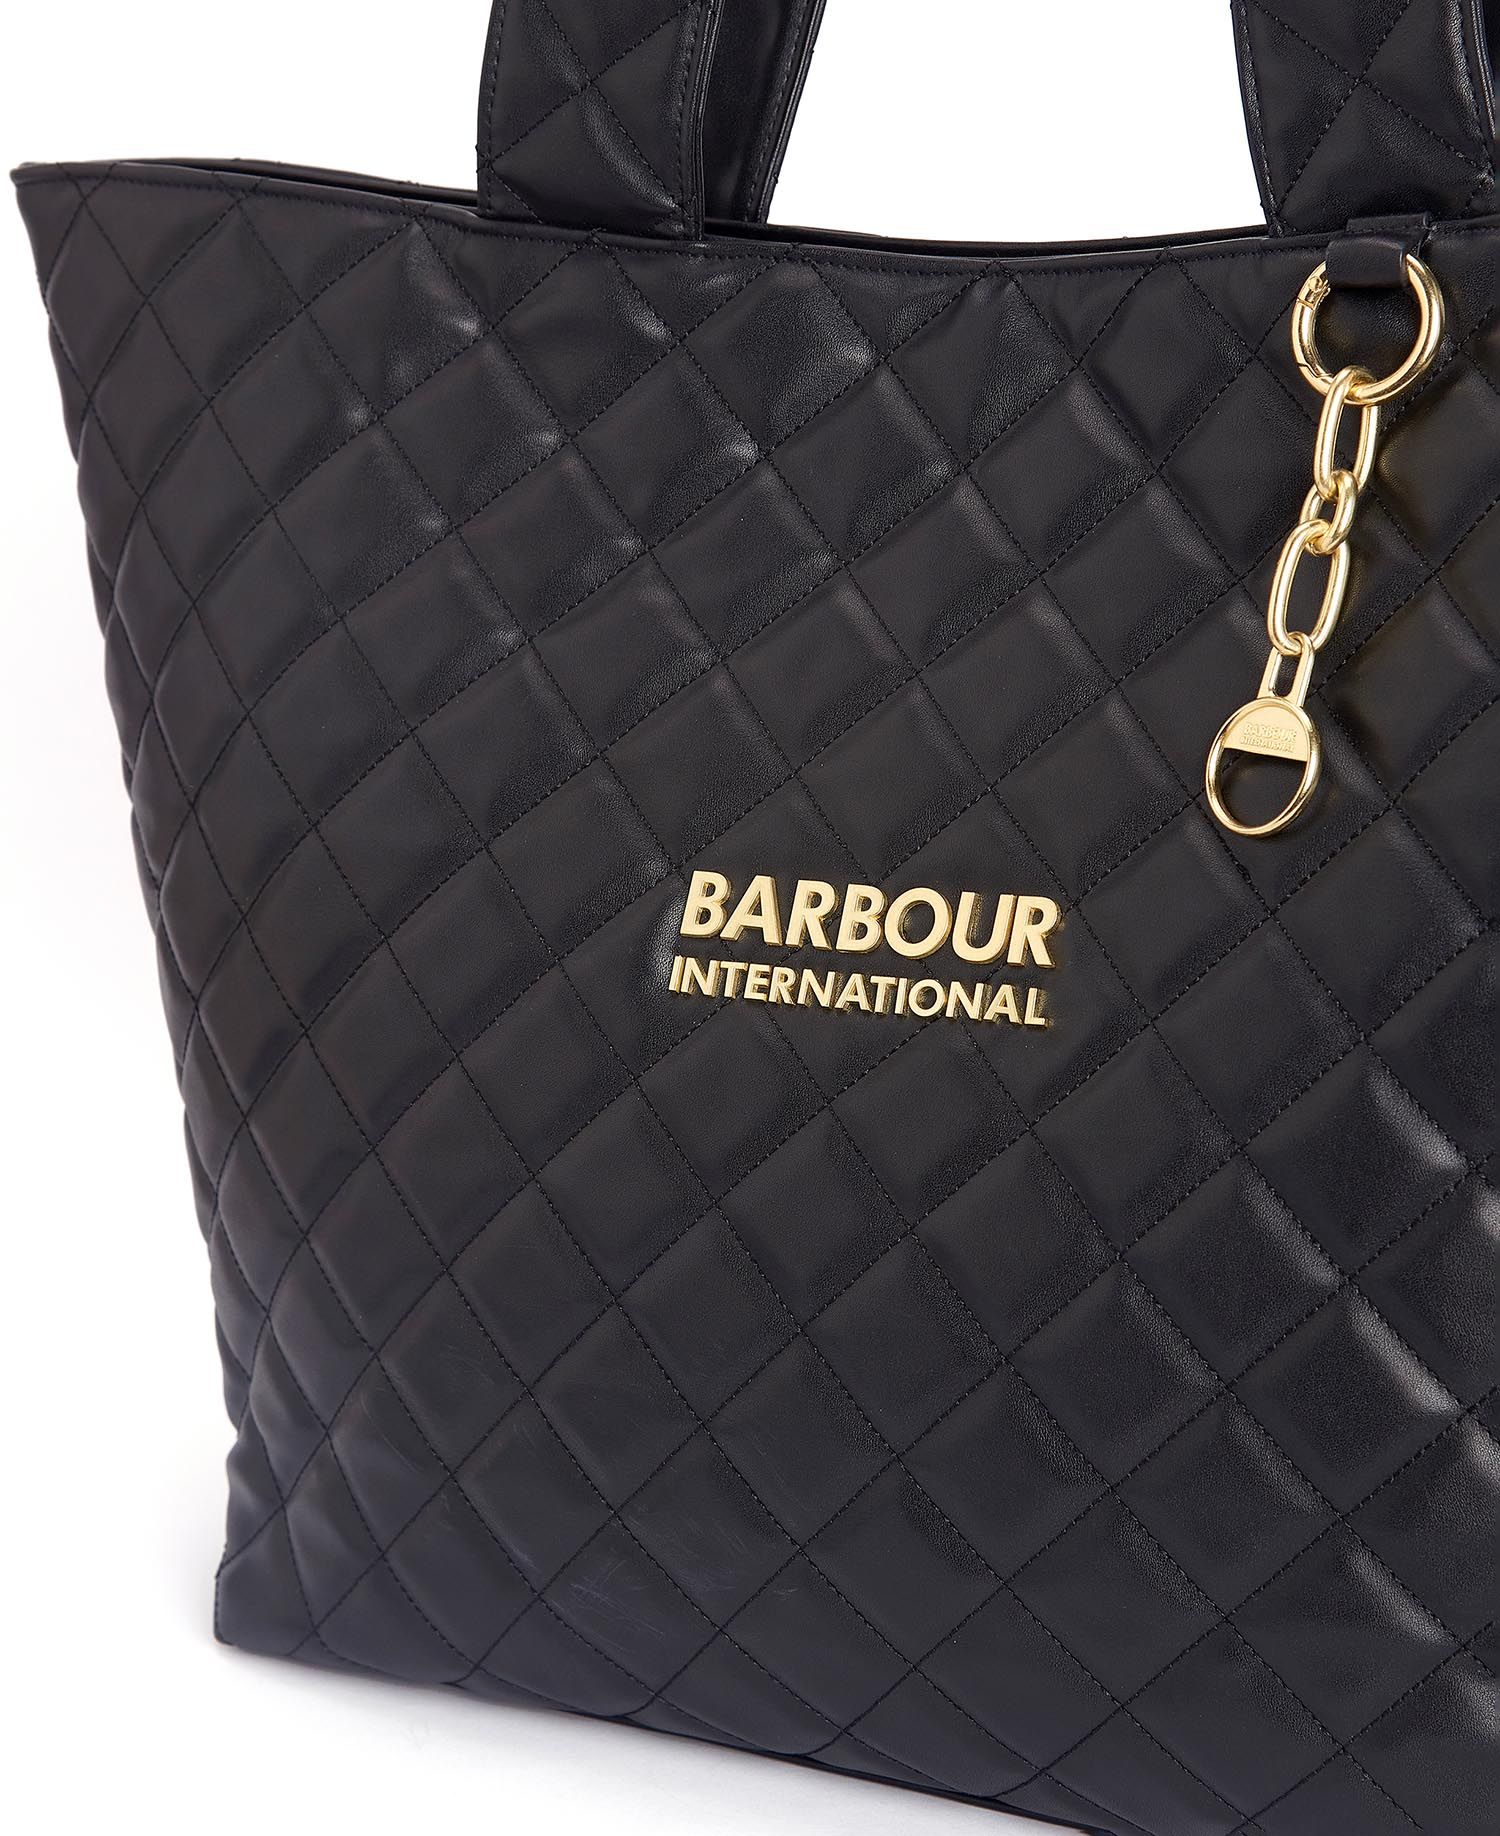 Barbour International Battersea Tote Bag - Black